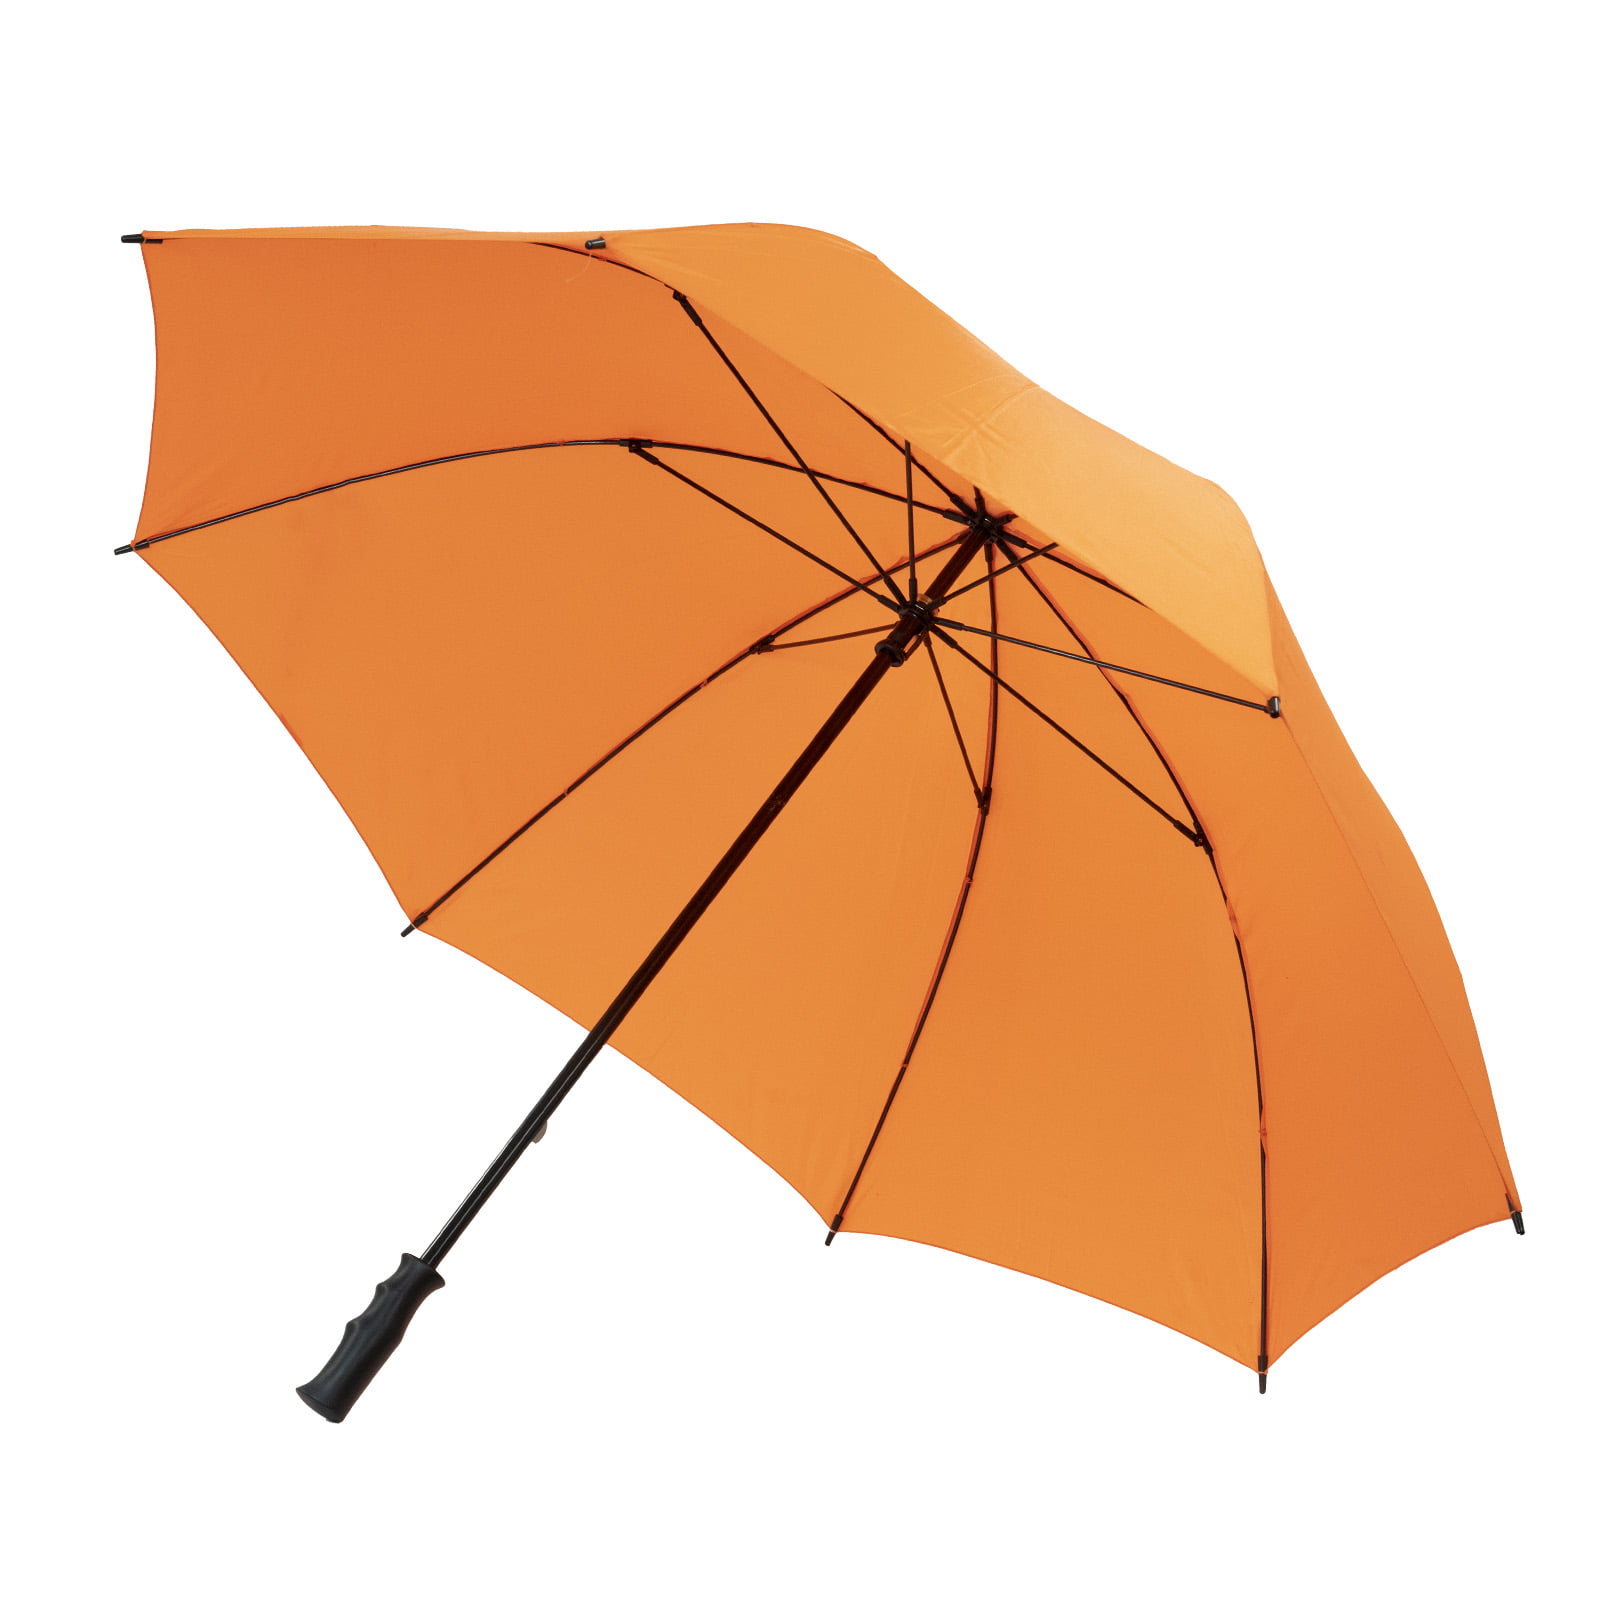 Orange Budget Golf Umbrella open